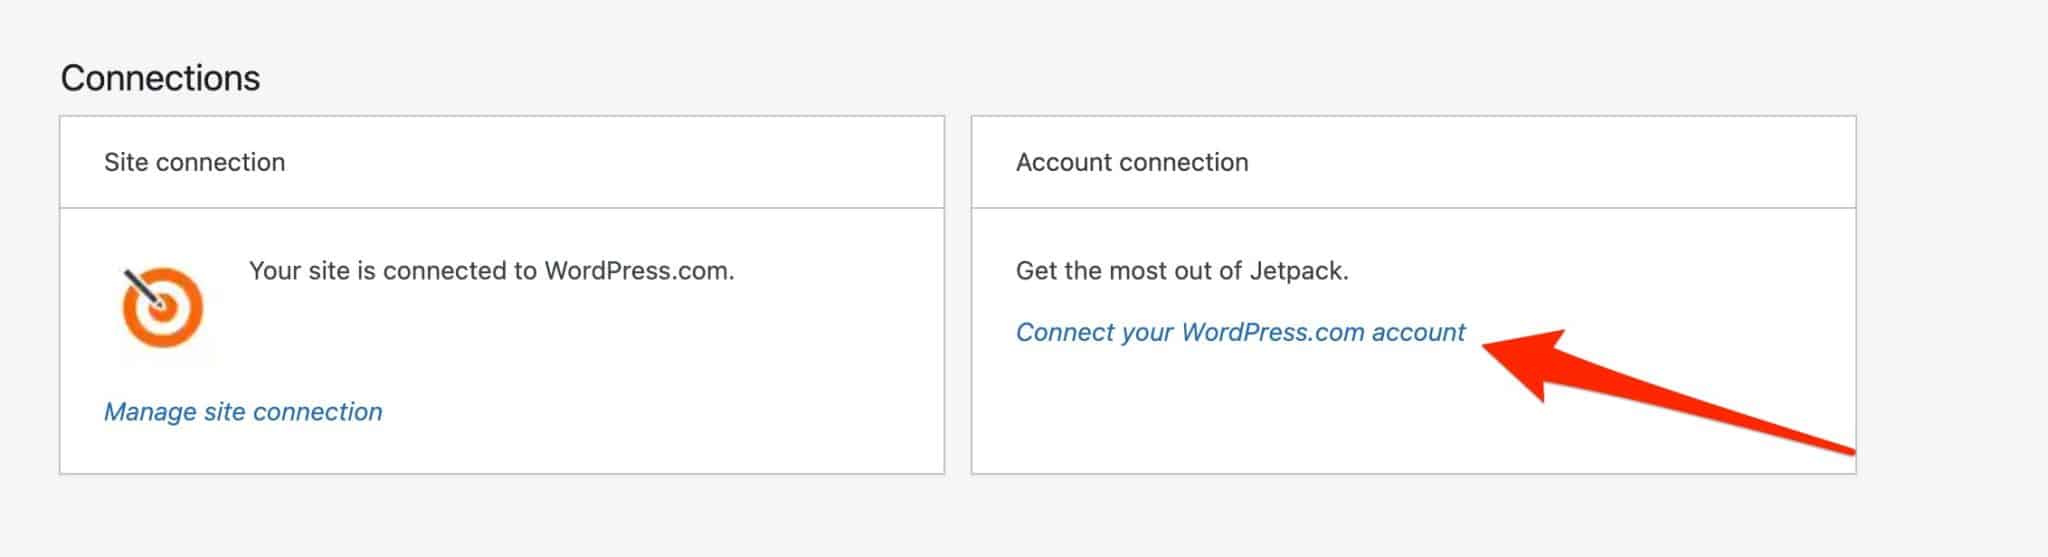 Jetpack connection insert on WordPress.